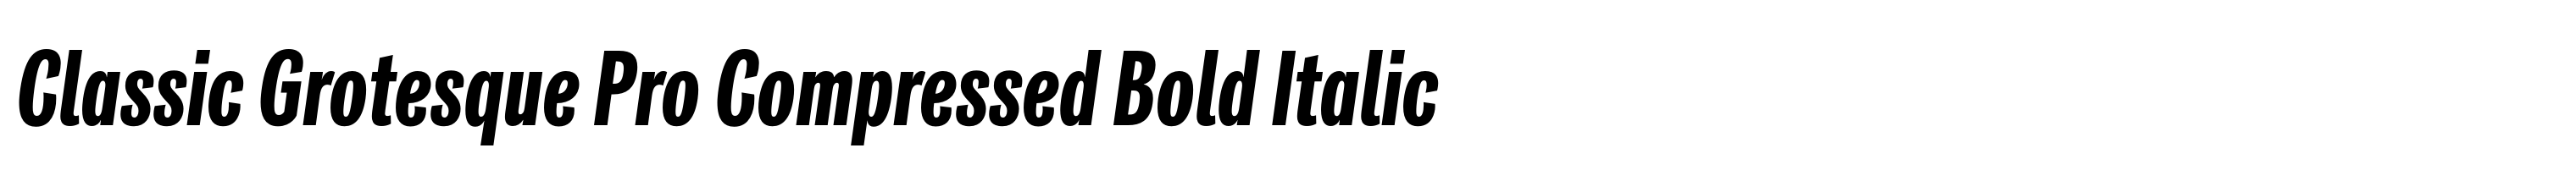 Classic Grotesque Pro Compressed Bold Italic